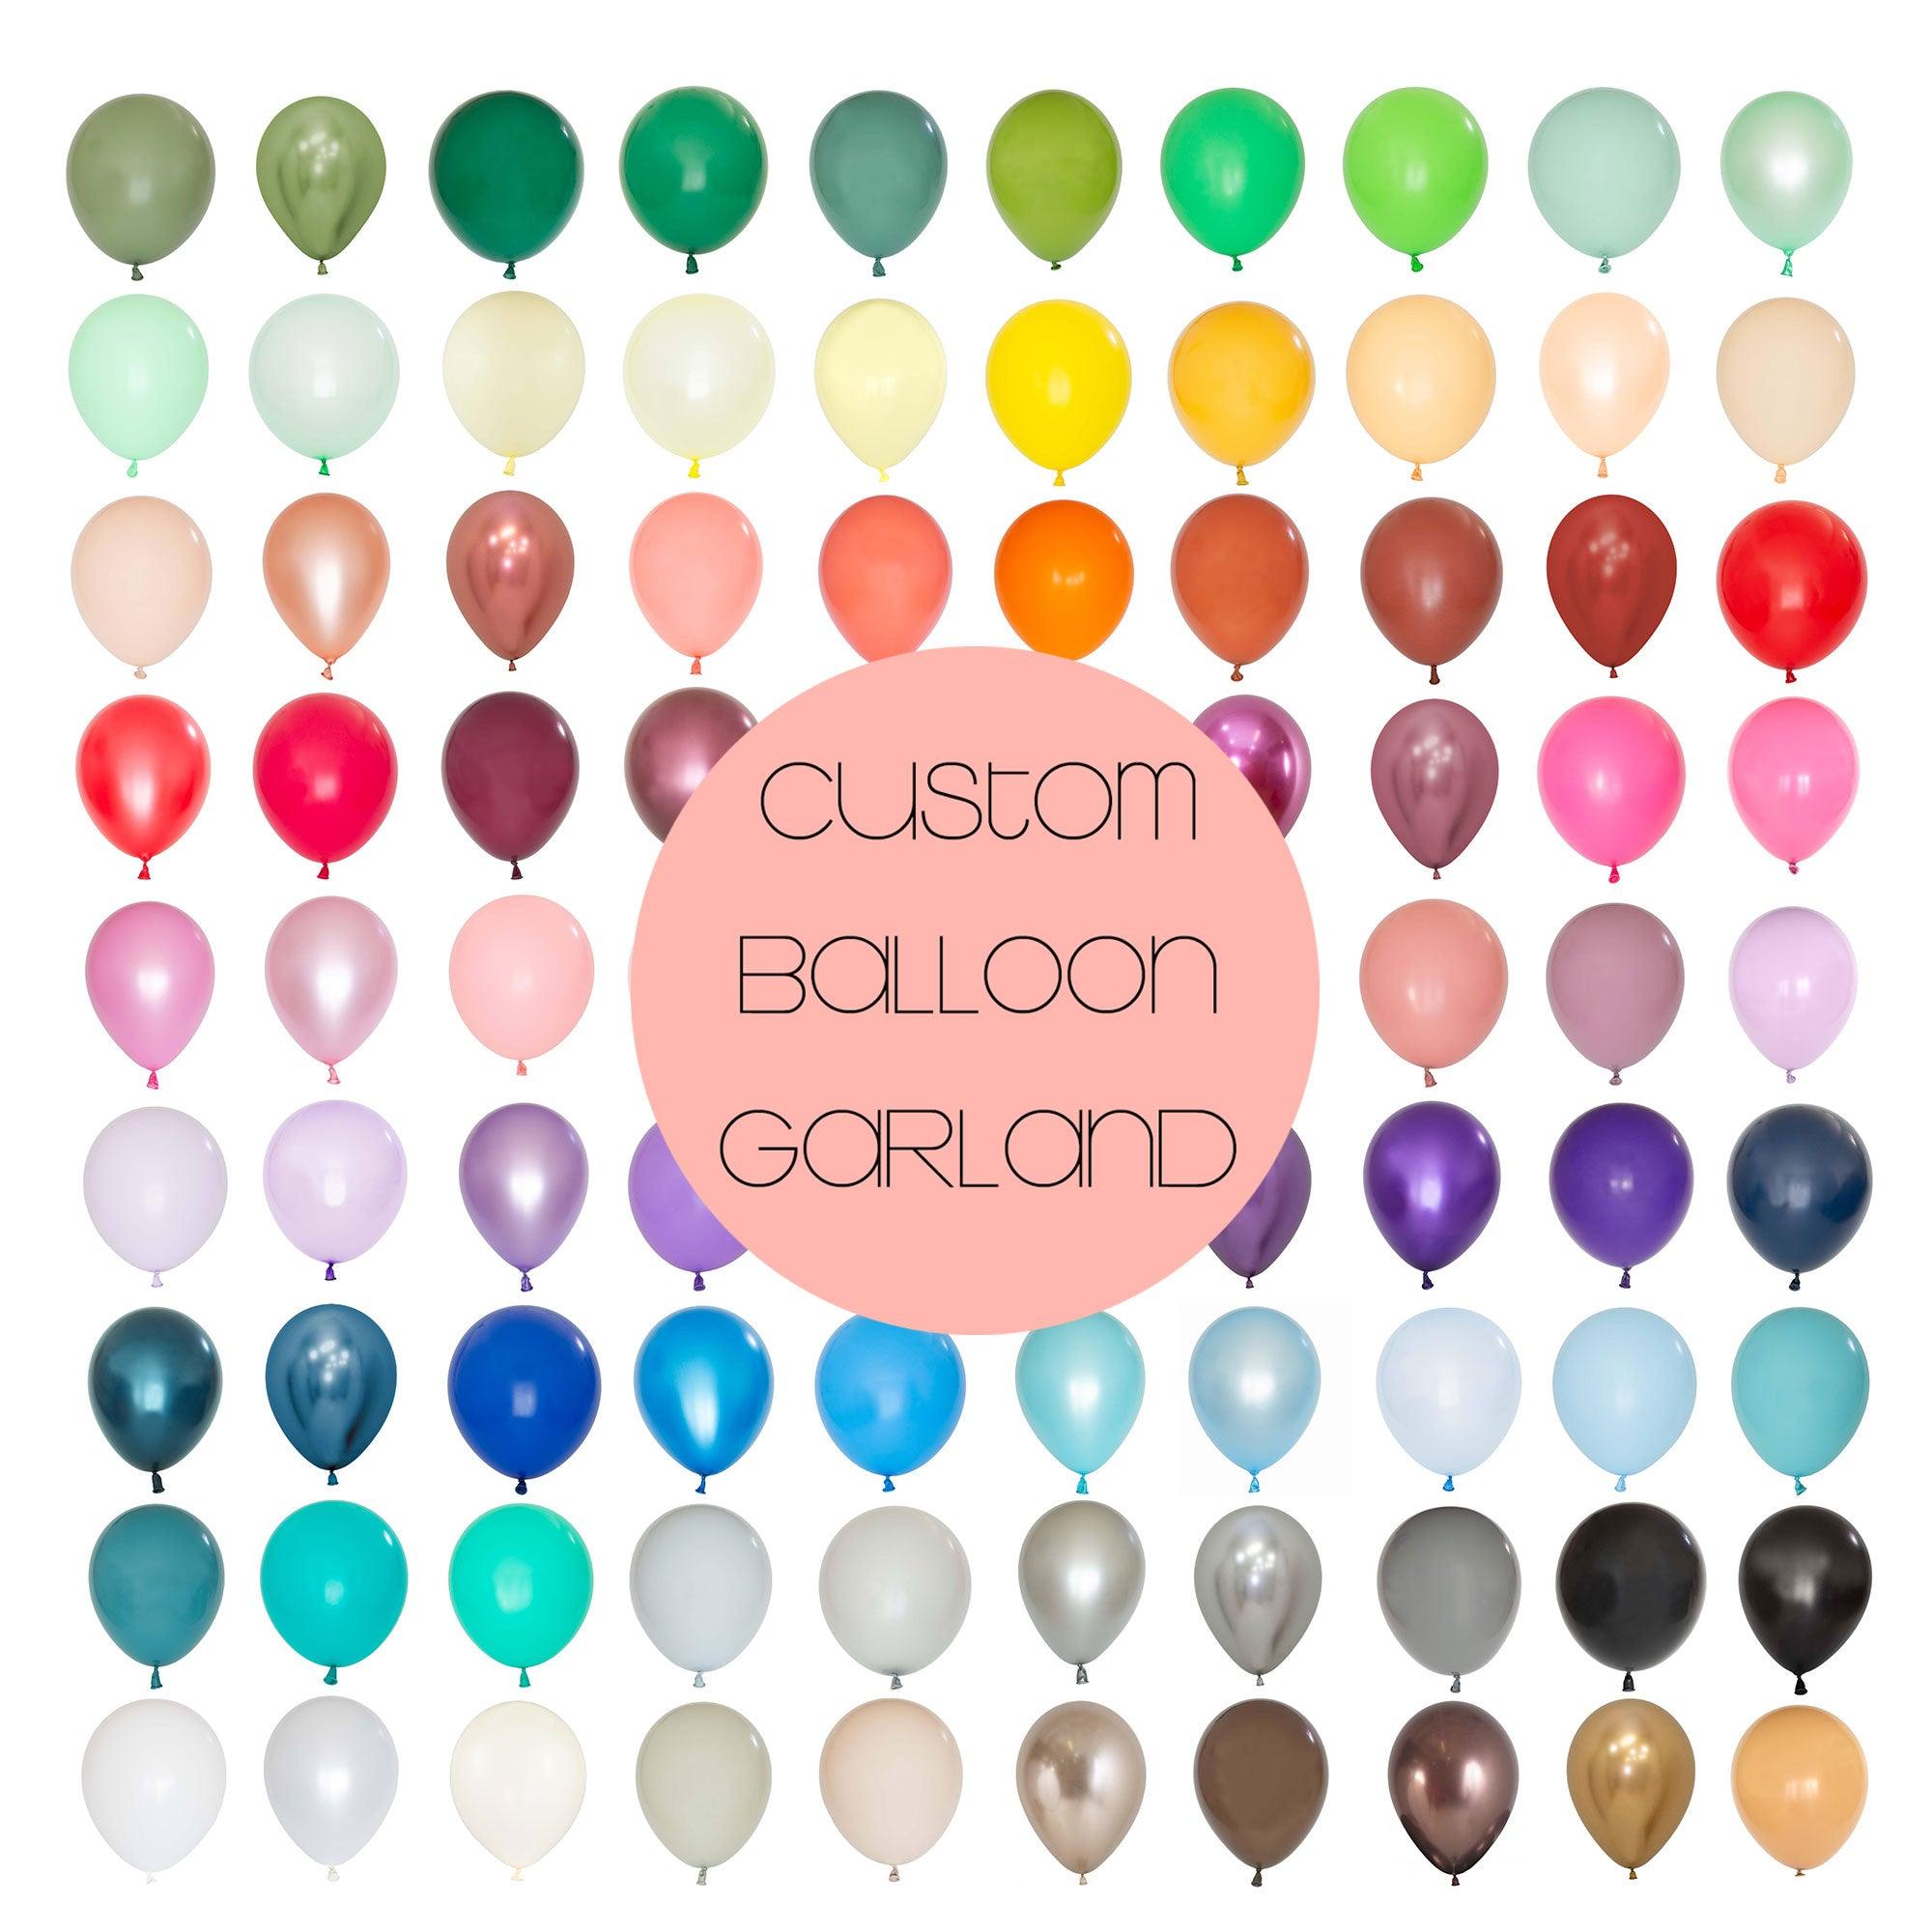 Custom Balloon Garland Kit - The Party Room